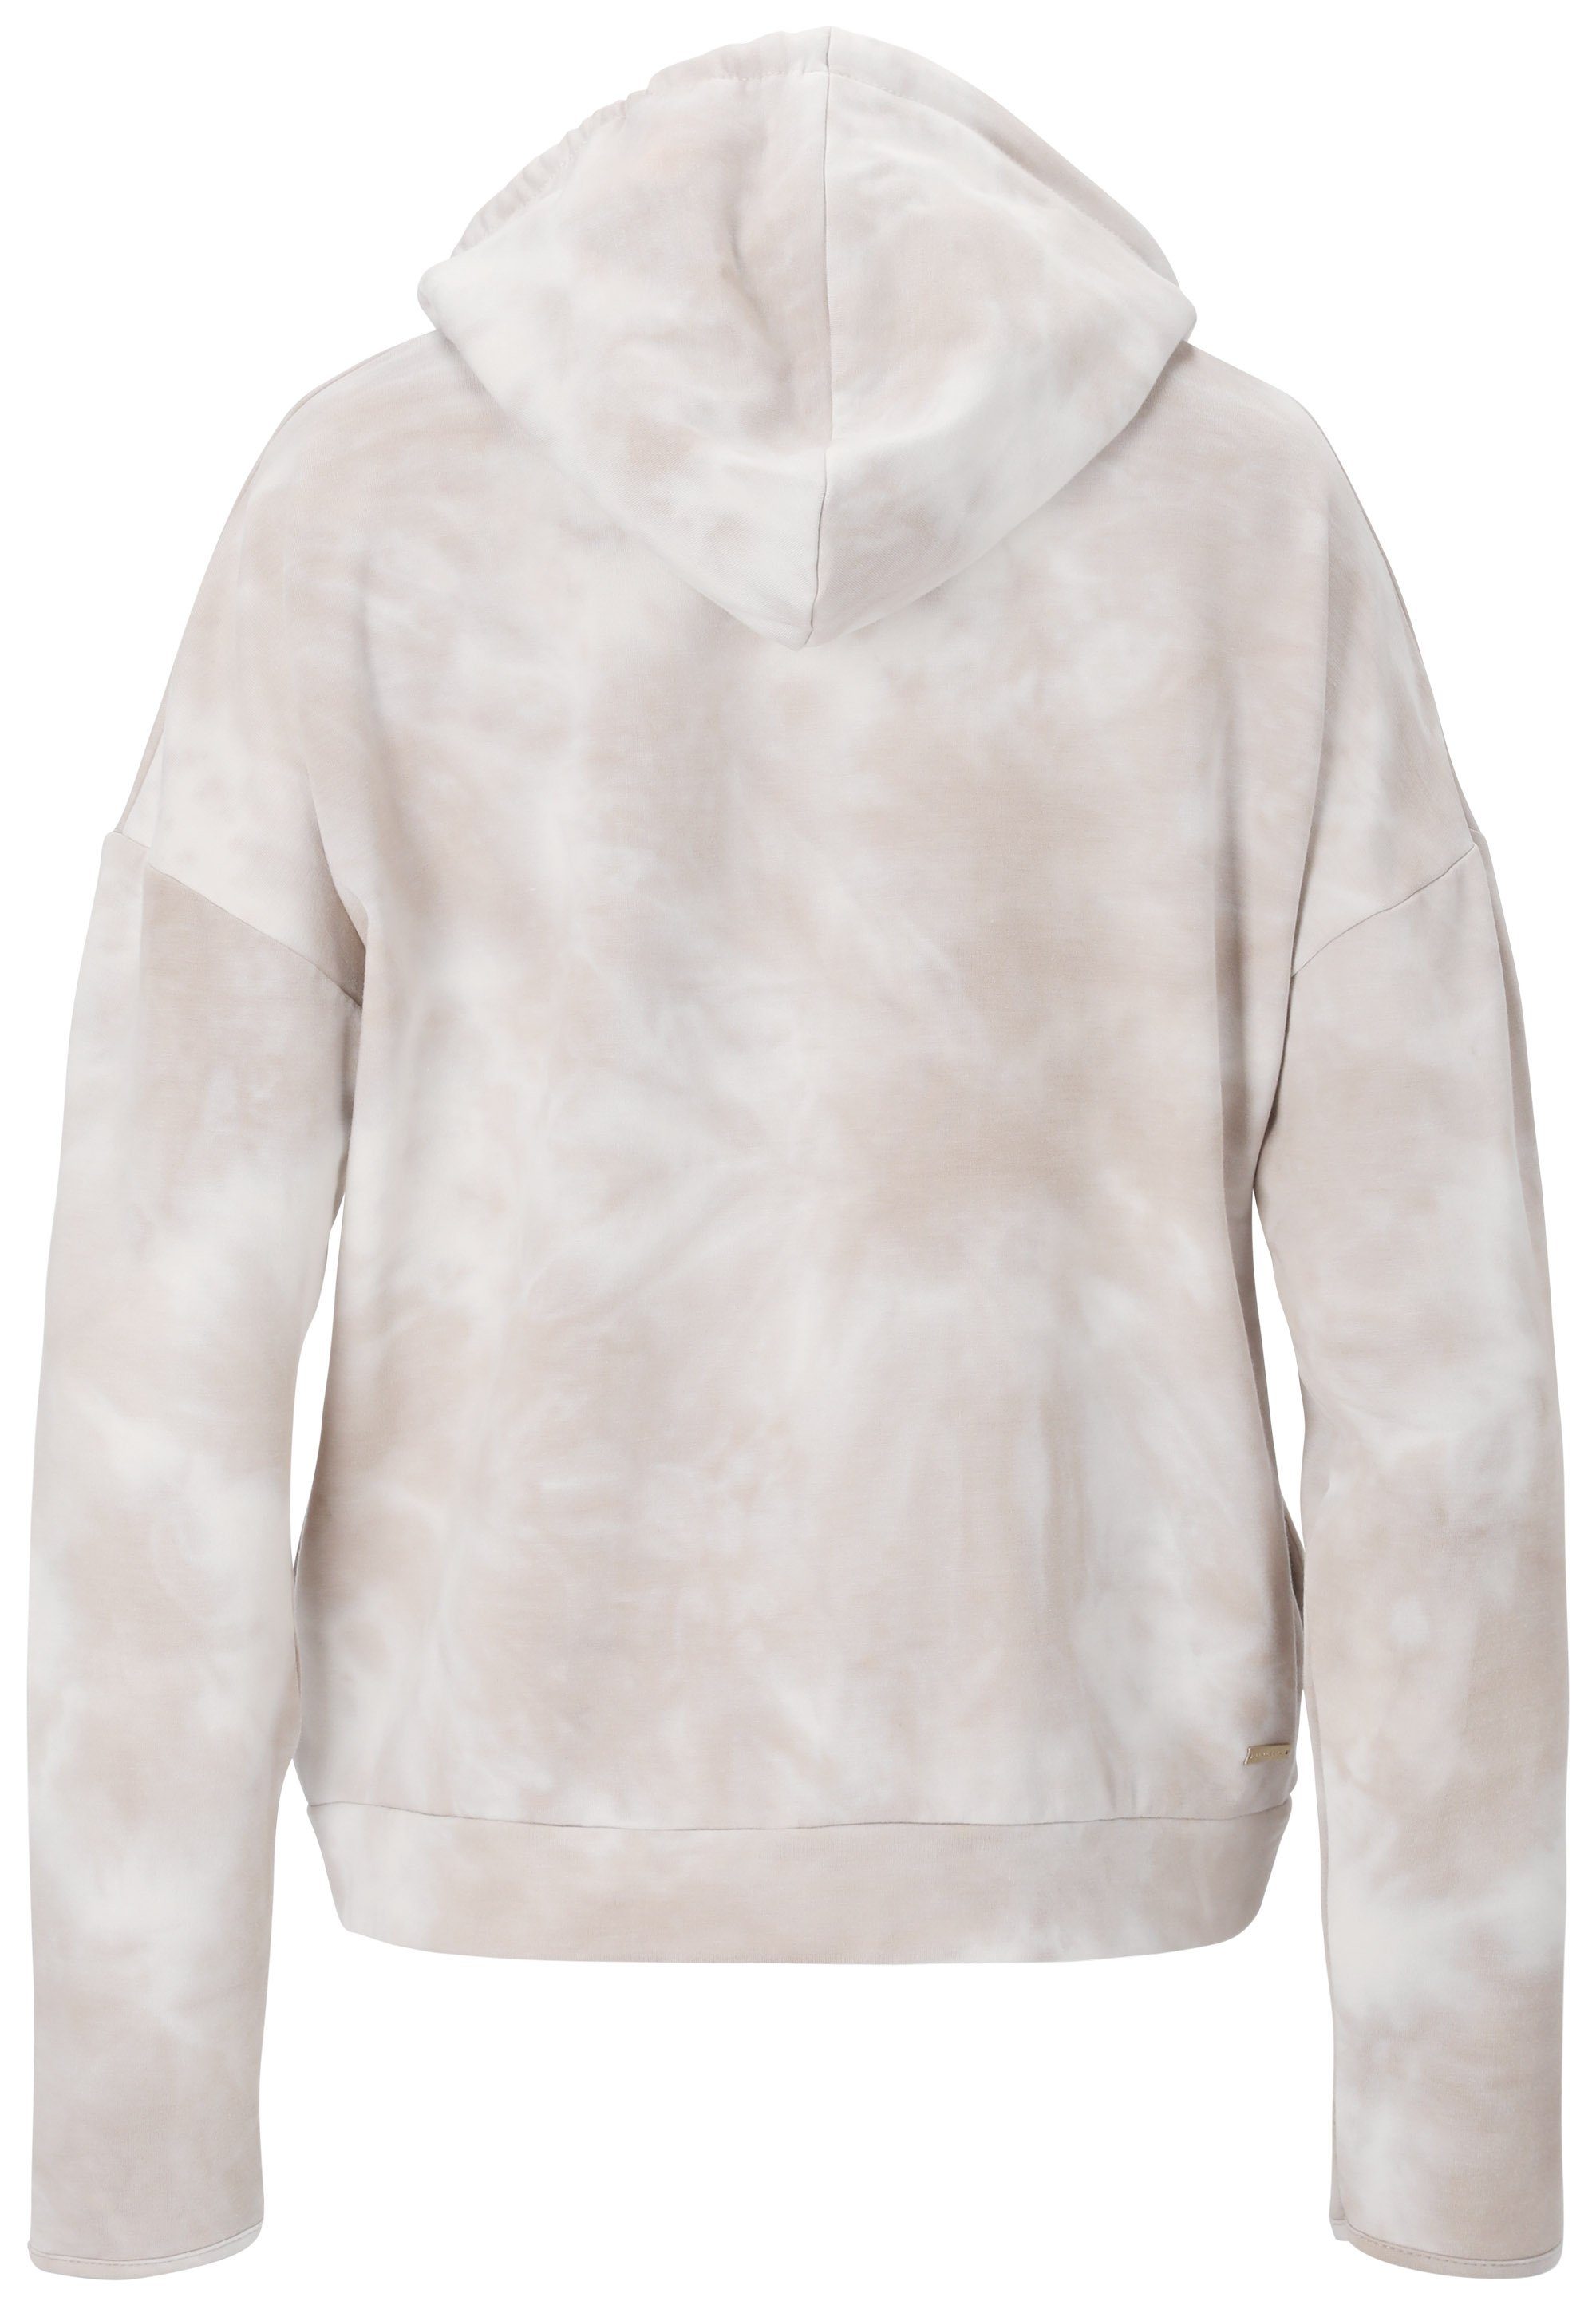 ATHLECIA Sweatshirt Reisalin Marmor-Effekt mit tollem